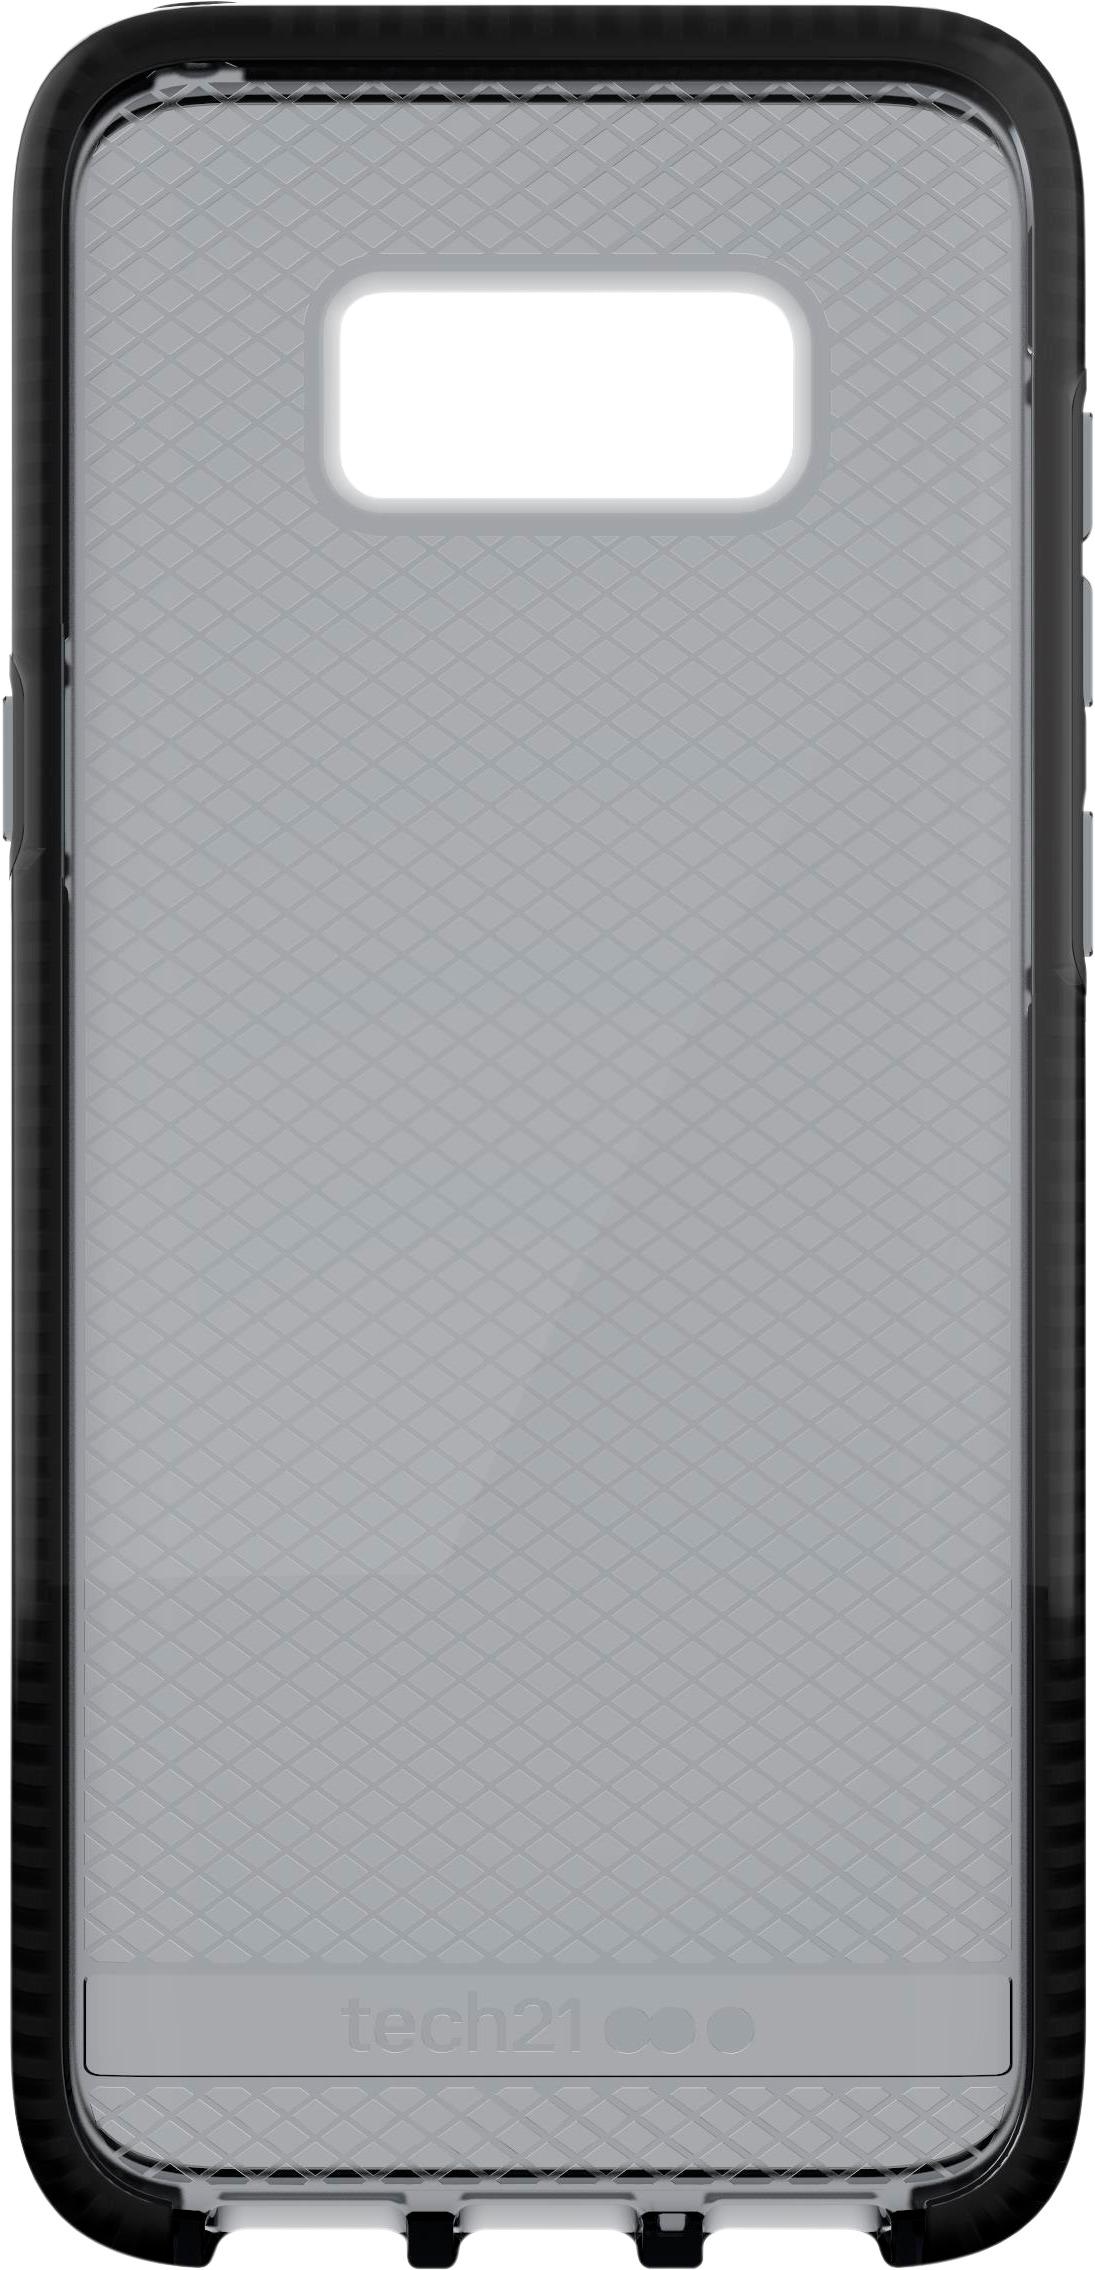 Tech21 Evo Check Case for Samsung Galaxy S8 Smokey/black